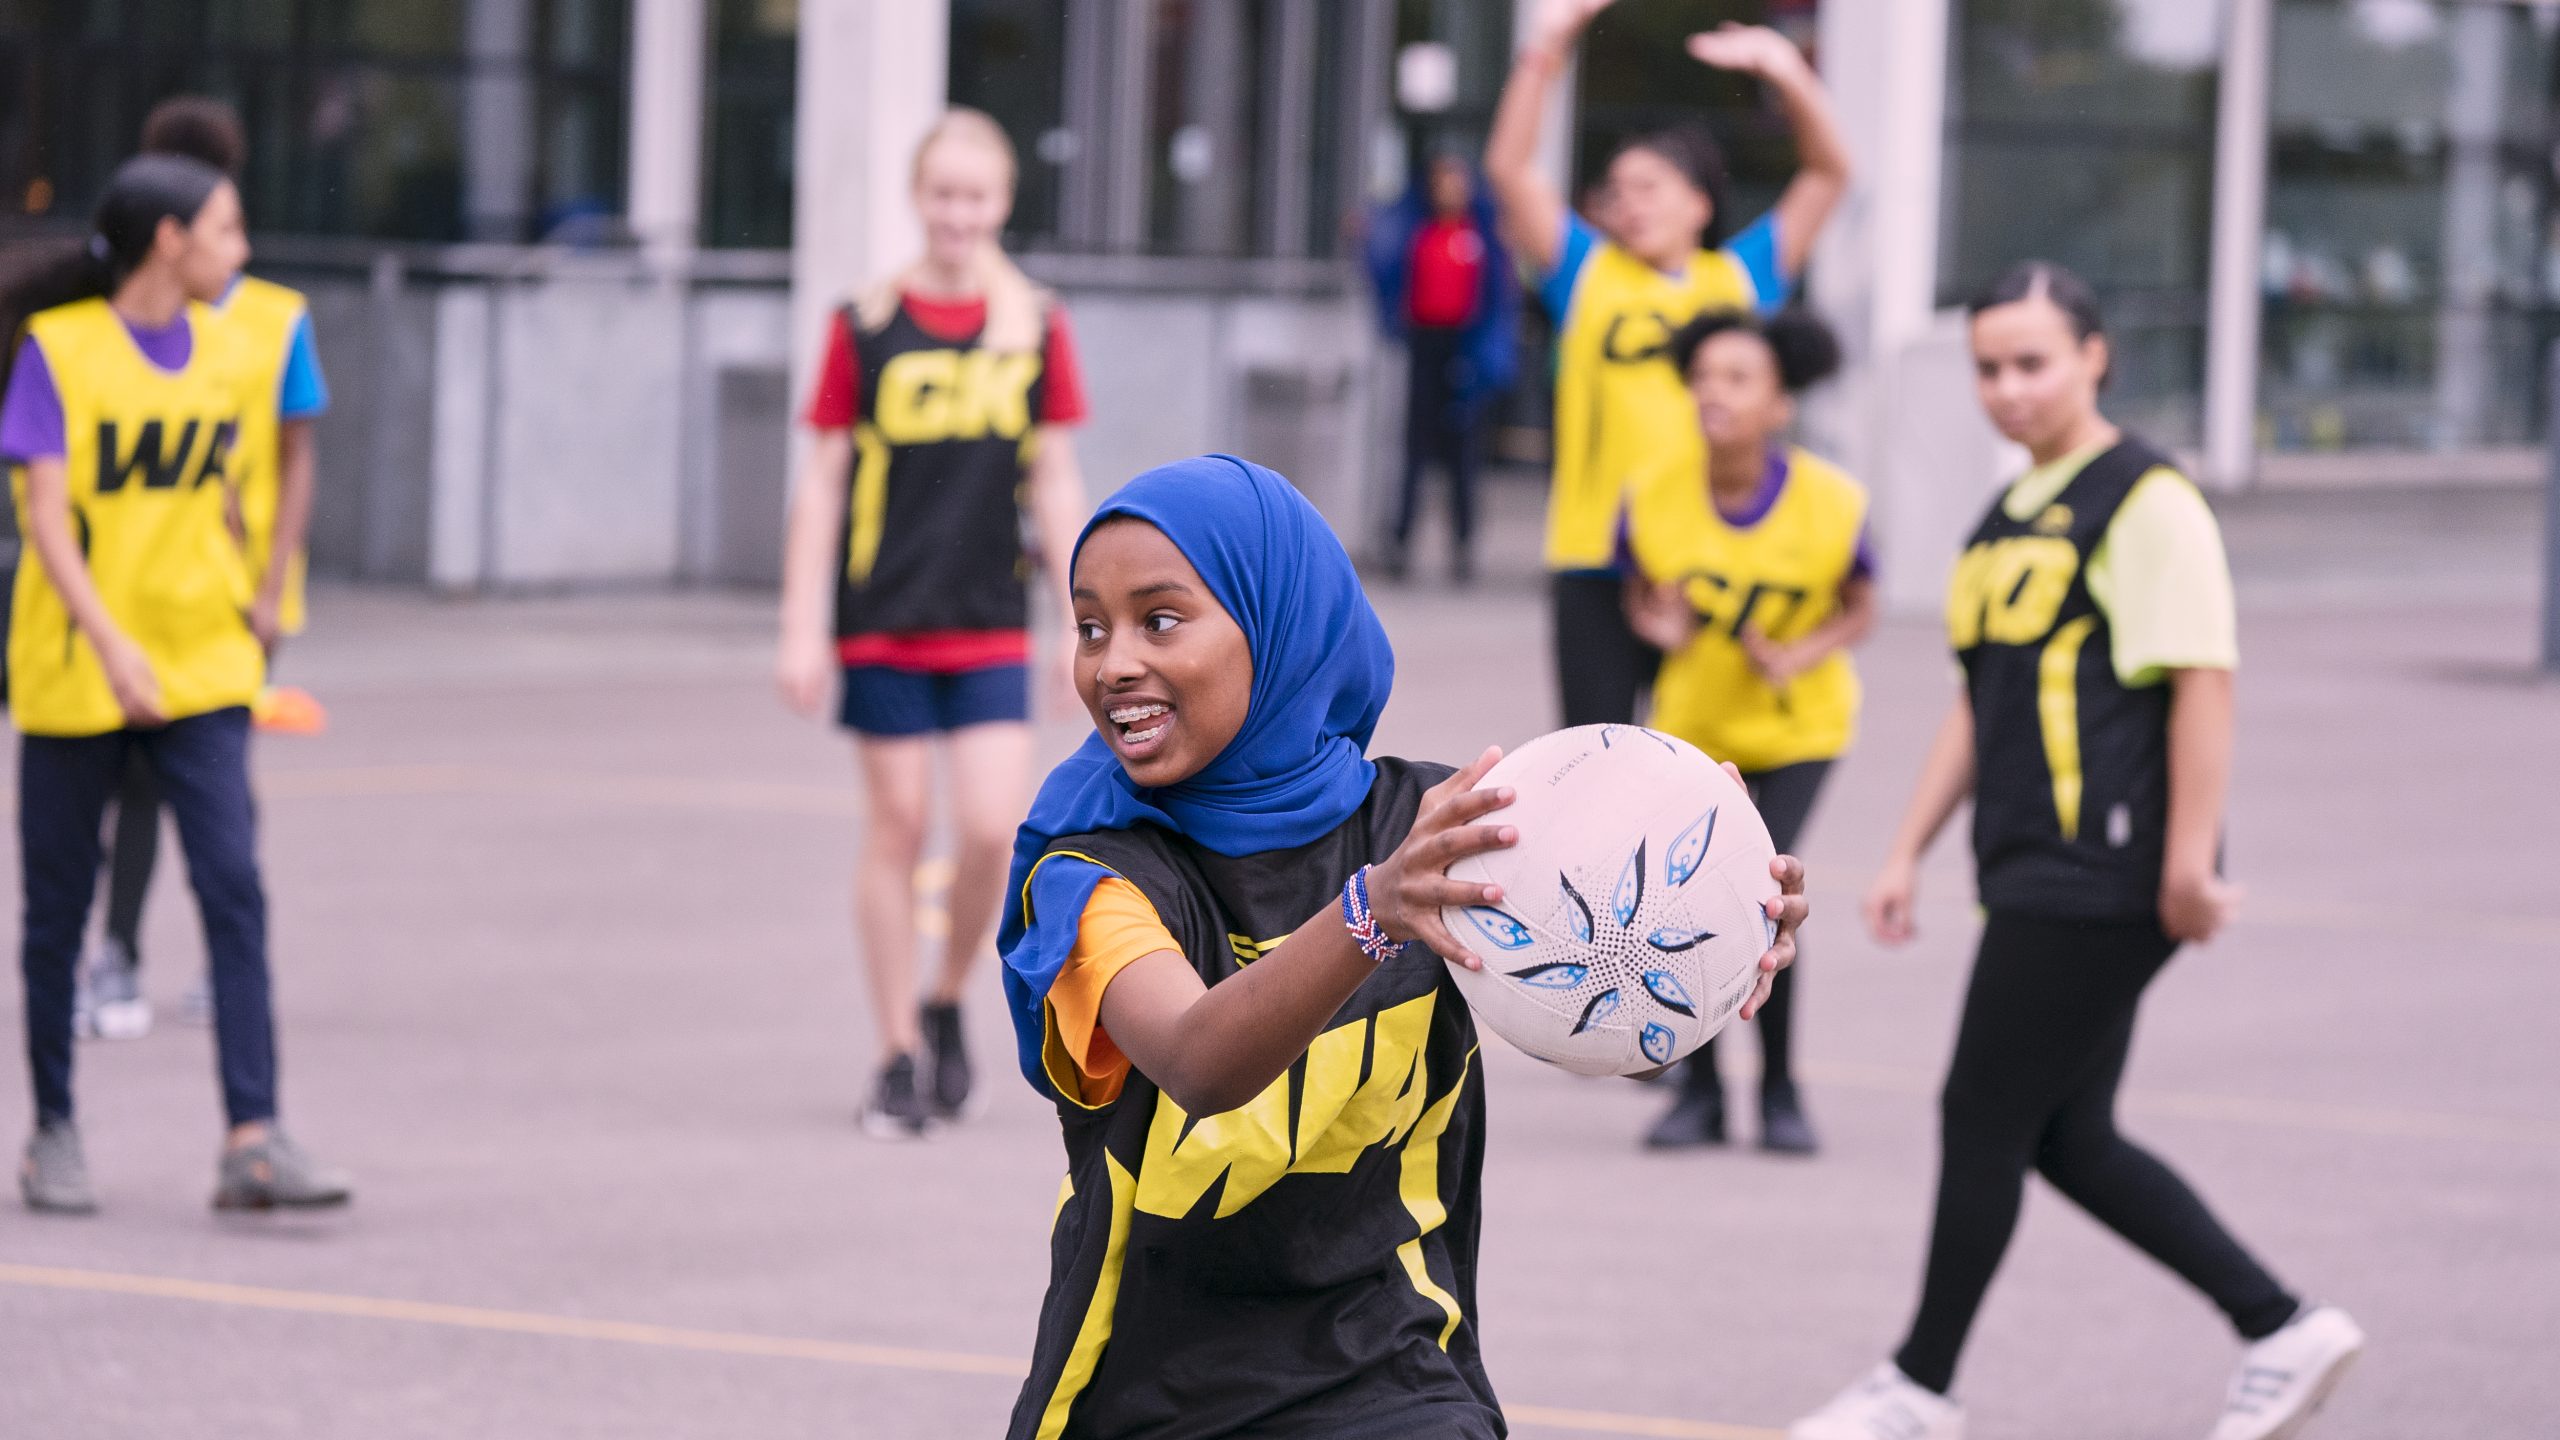 A young Muslim woman playing netball